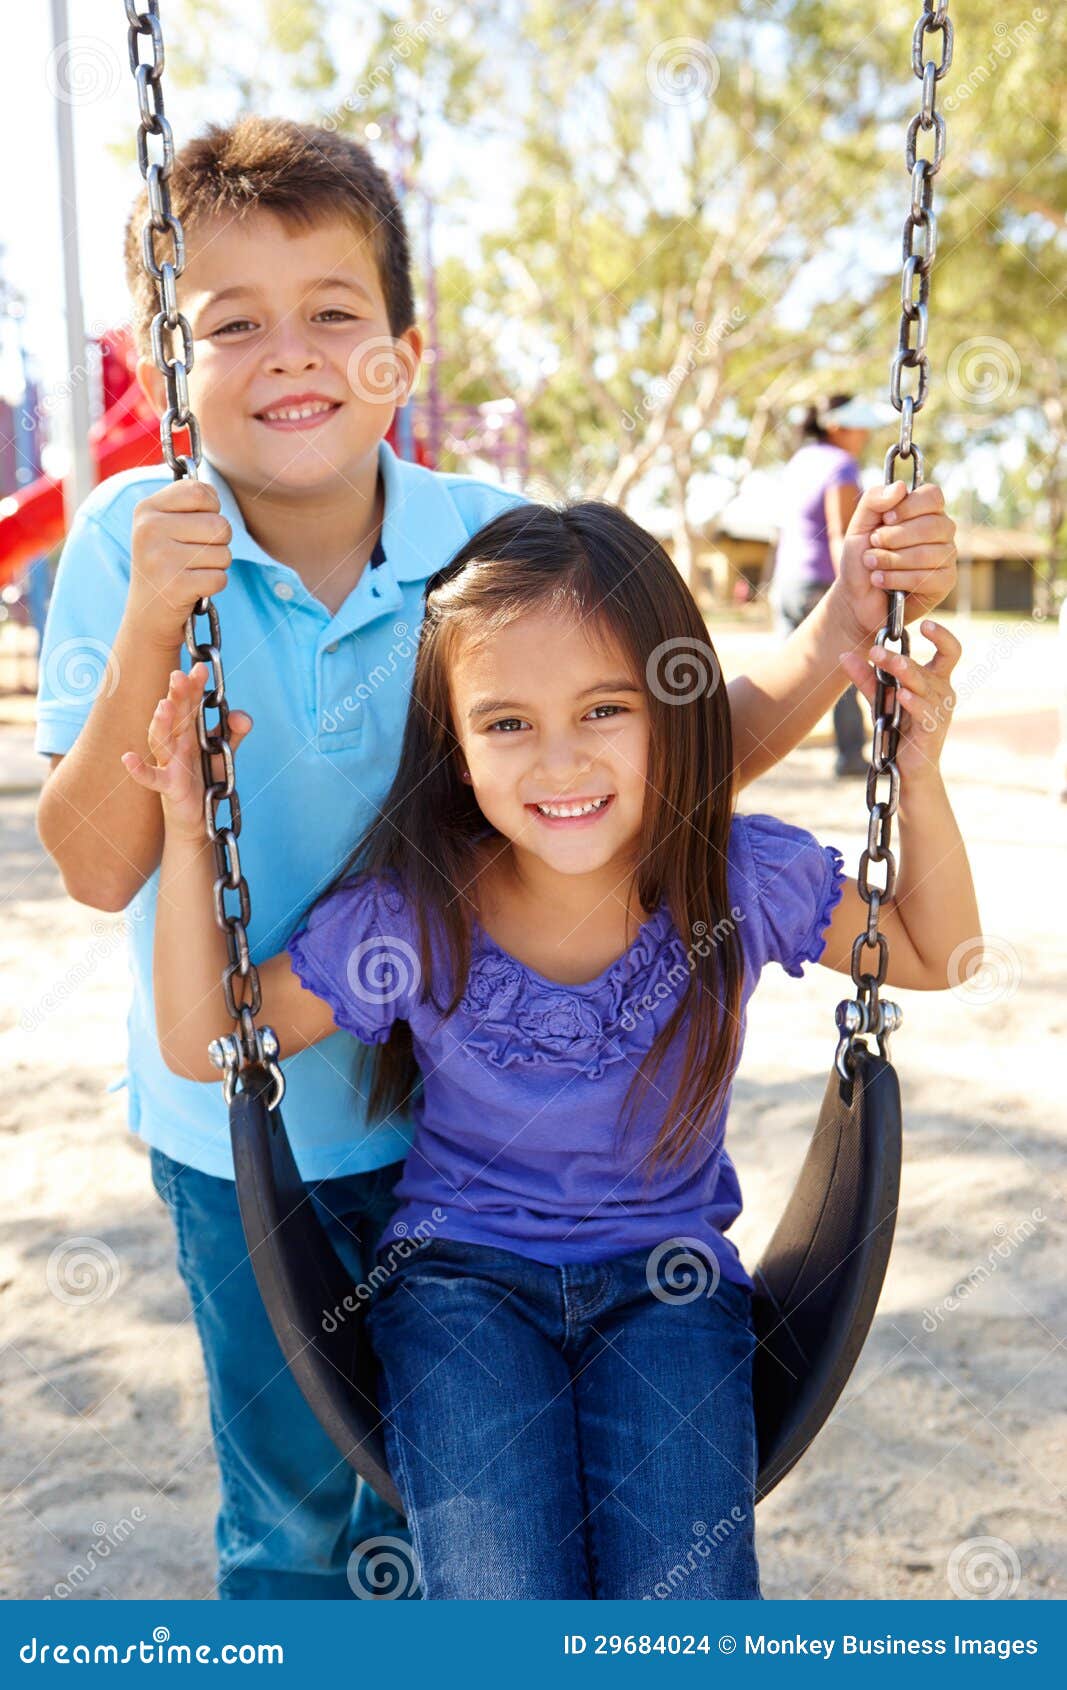 boy-girl-playing-swing-park-29684024.jpg